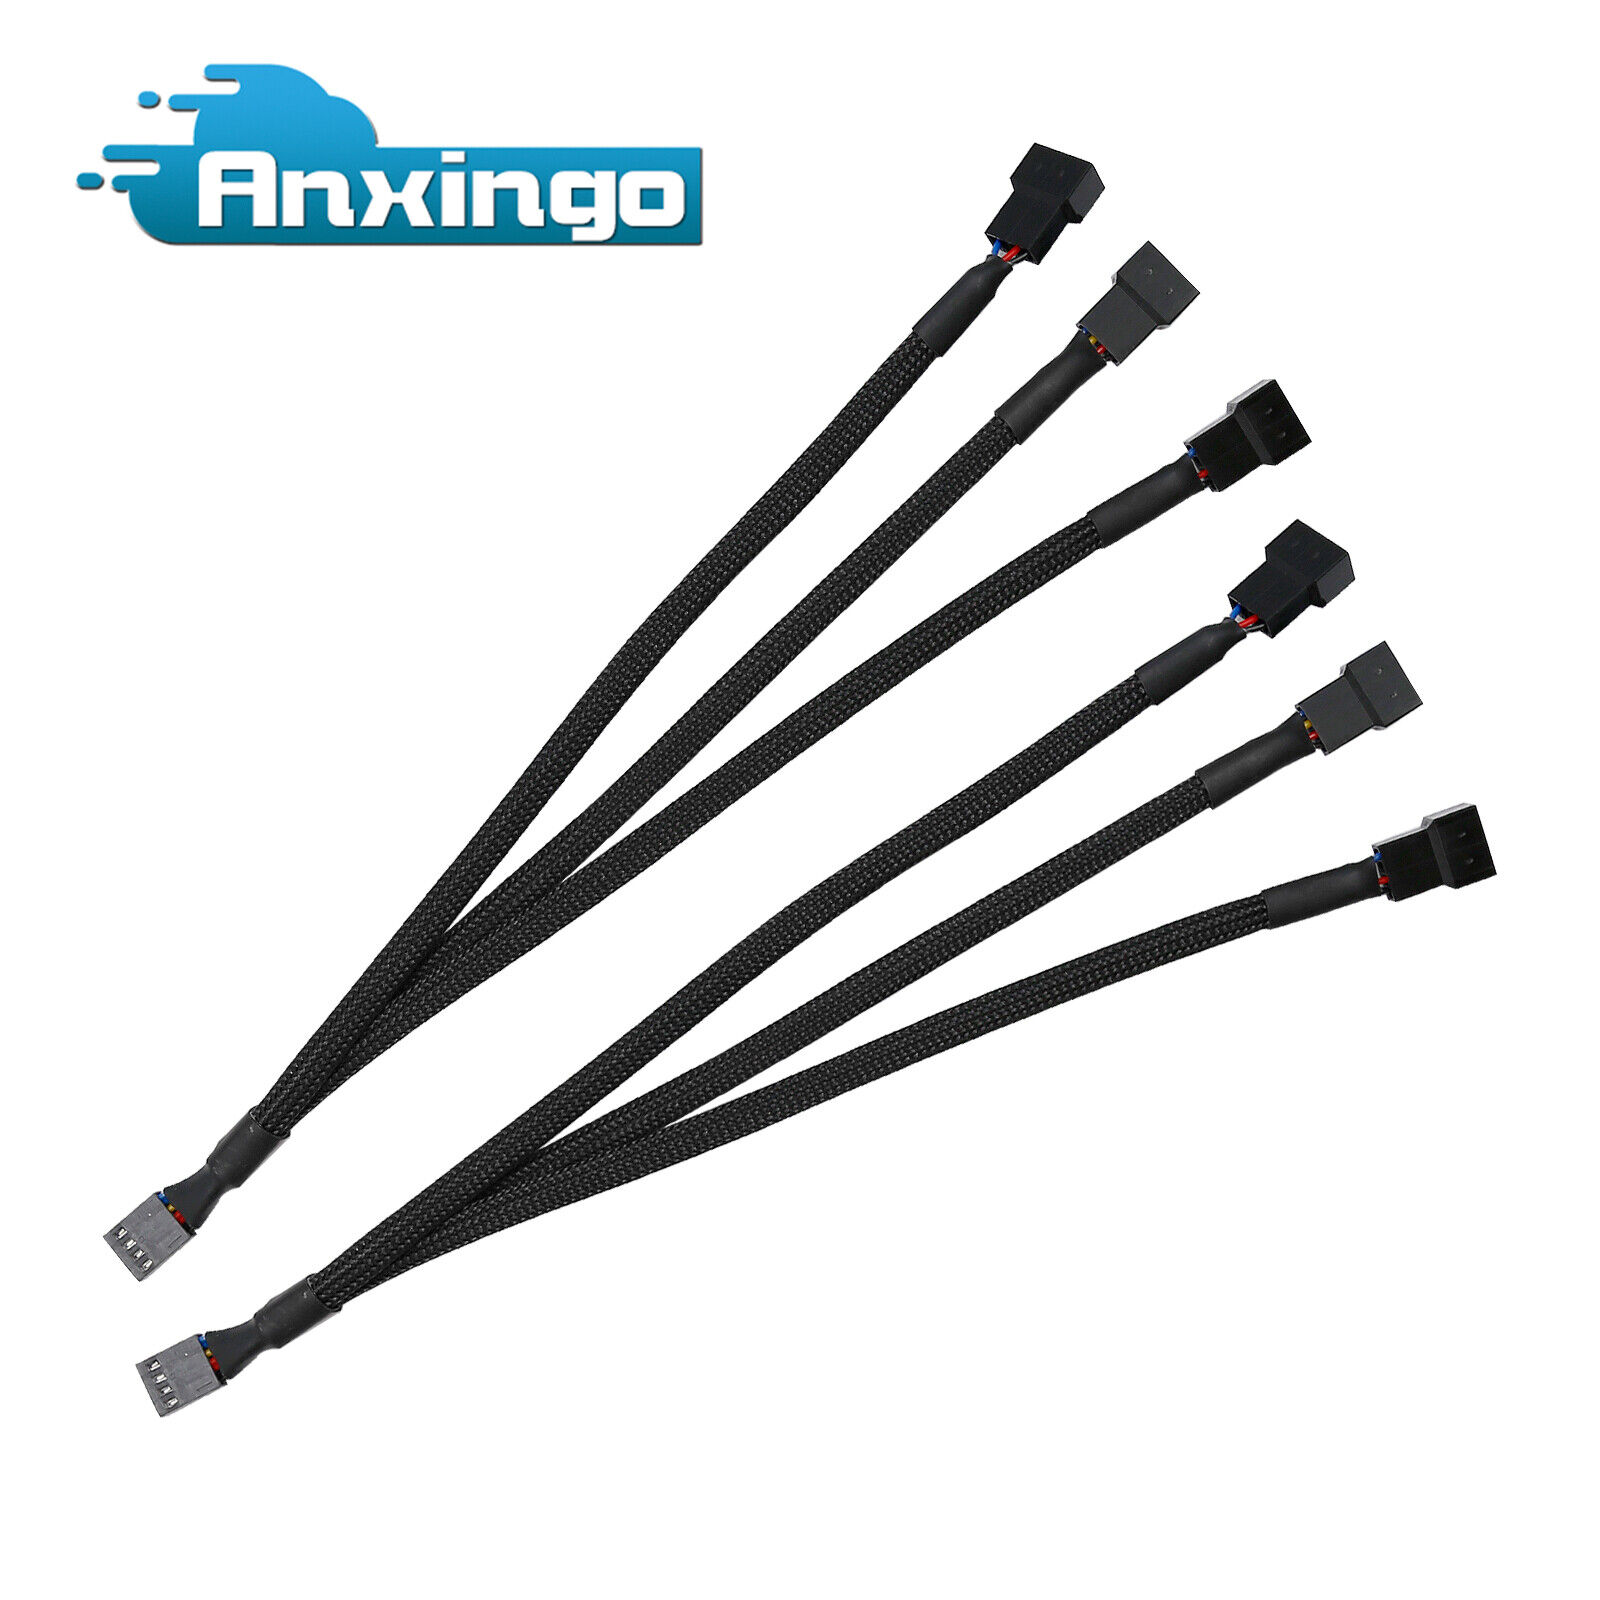 2 Pcs 4 Pin 1 to 3 Way PWM Case PC Fan Splitter Cable Hub Power Adapter 10 inch